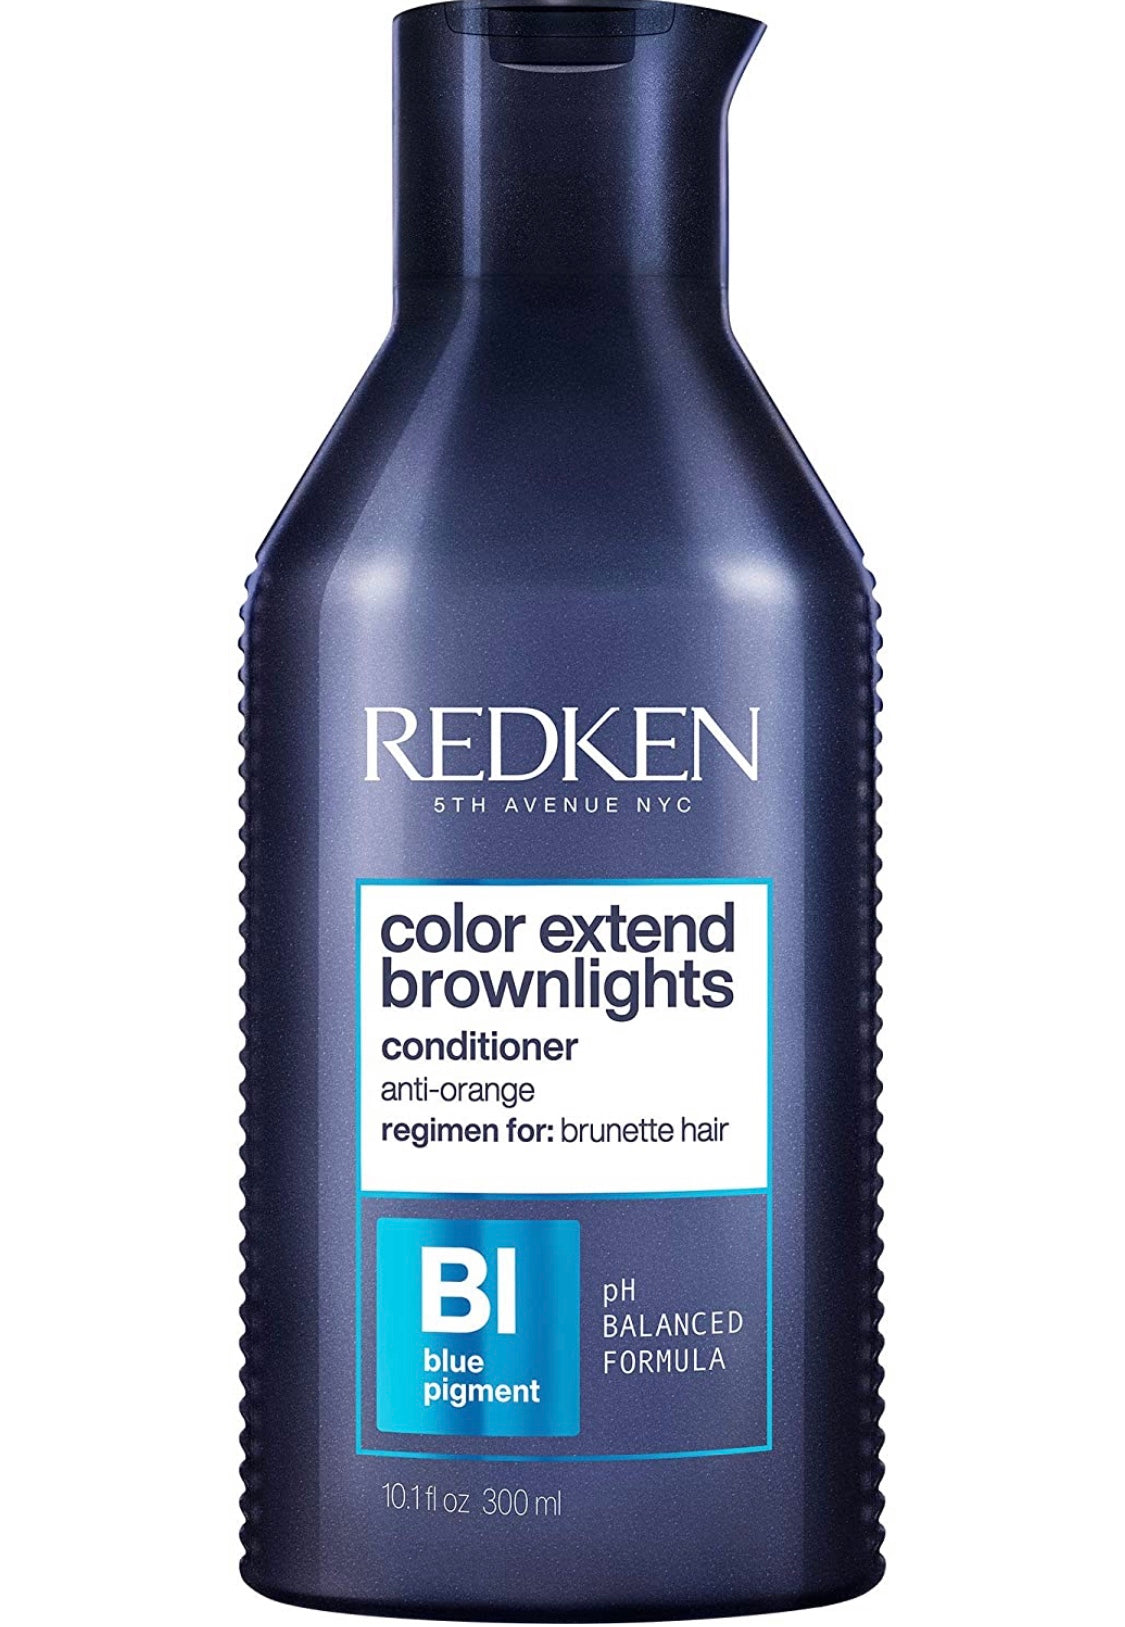 Redken - Color extend blownlights conditioner  Bi 10.1 fl. oz./ 300 ml